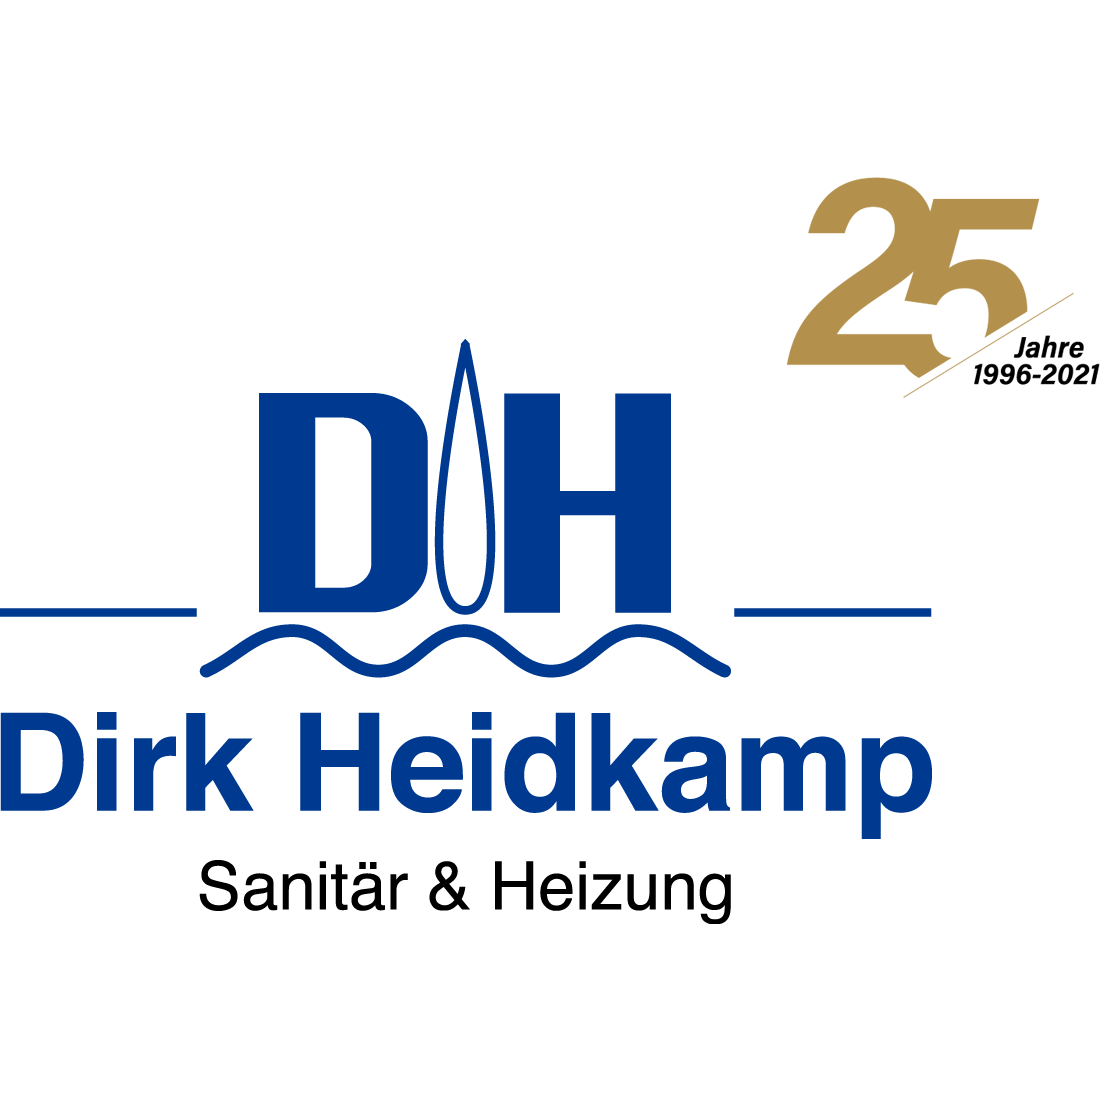 Dirk Heidkamp Sanitär & Heizung in Minden in Westfalen - Logo